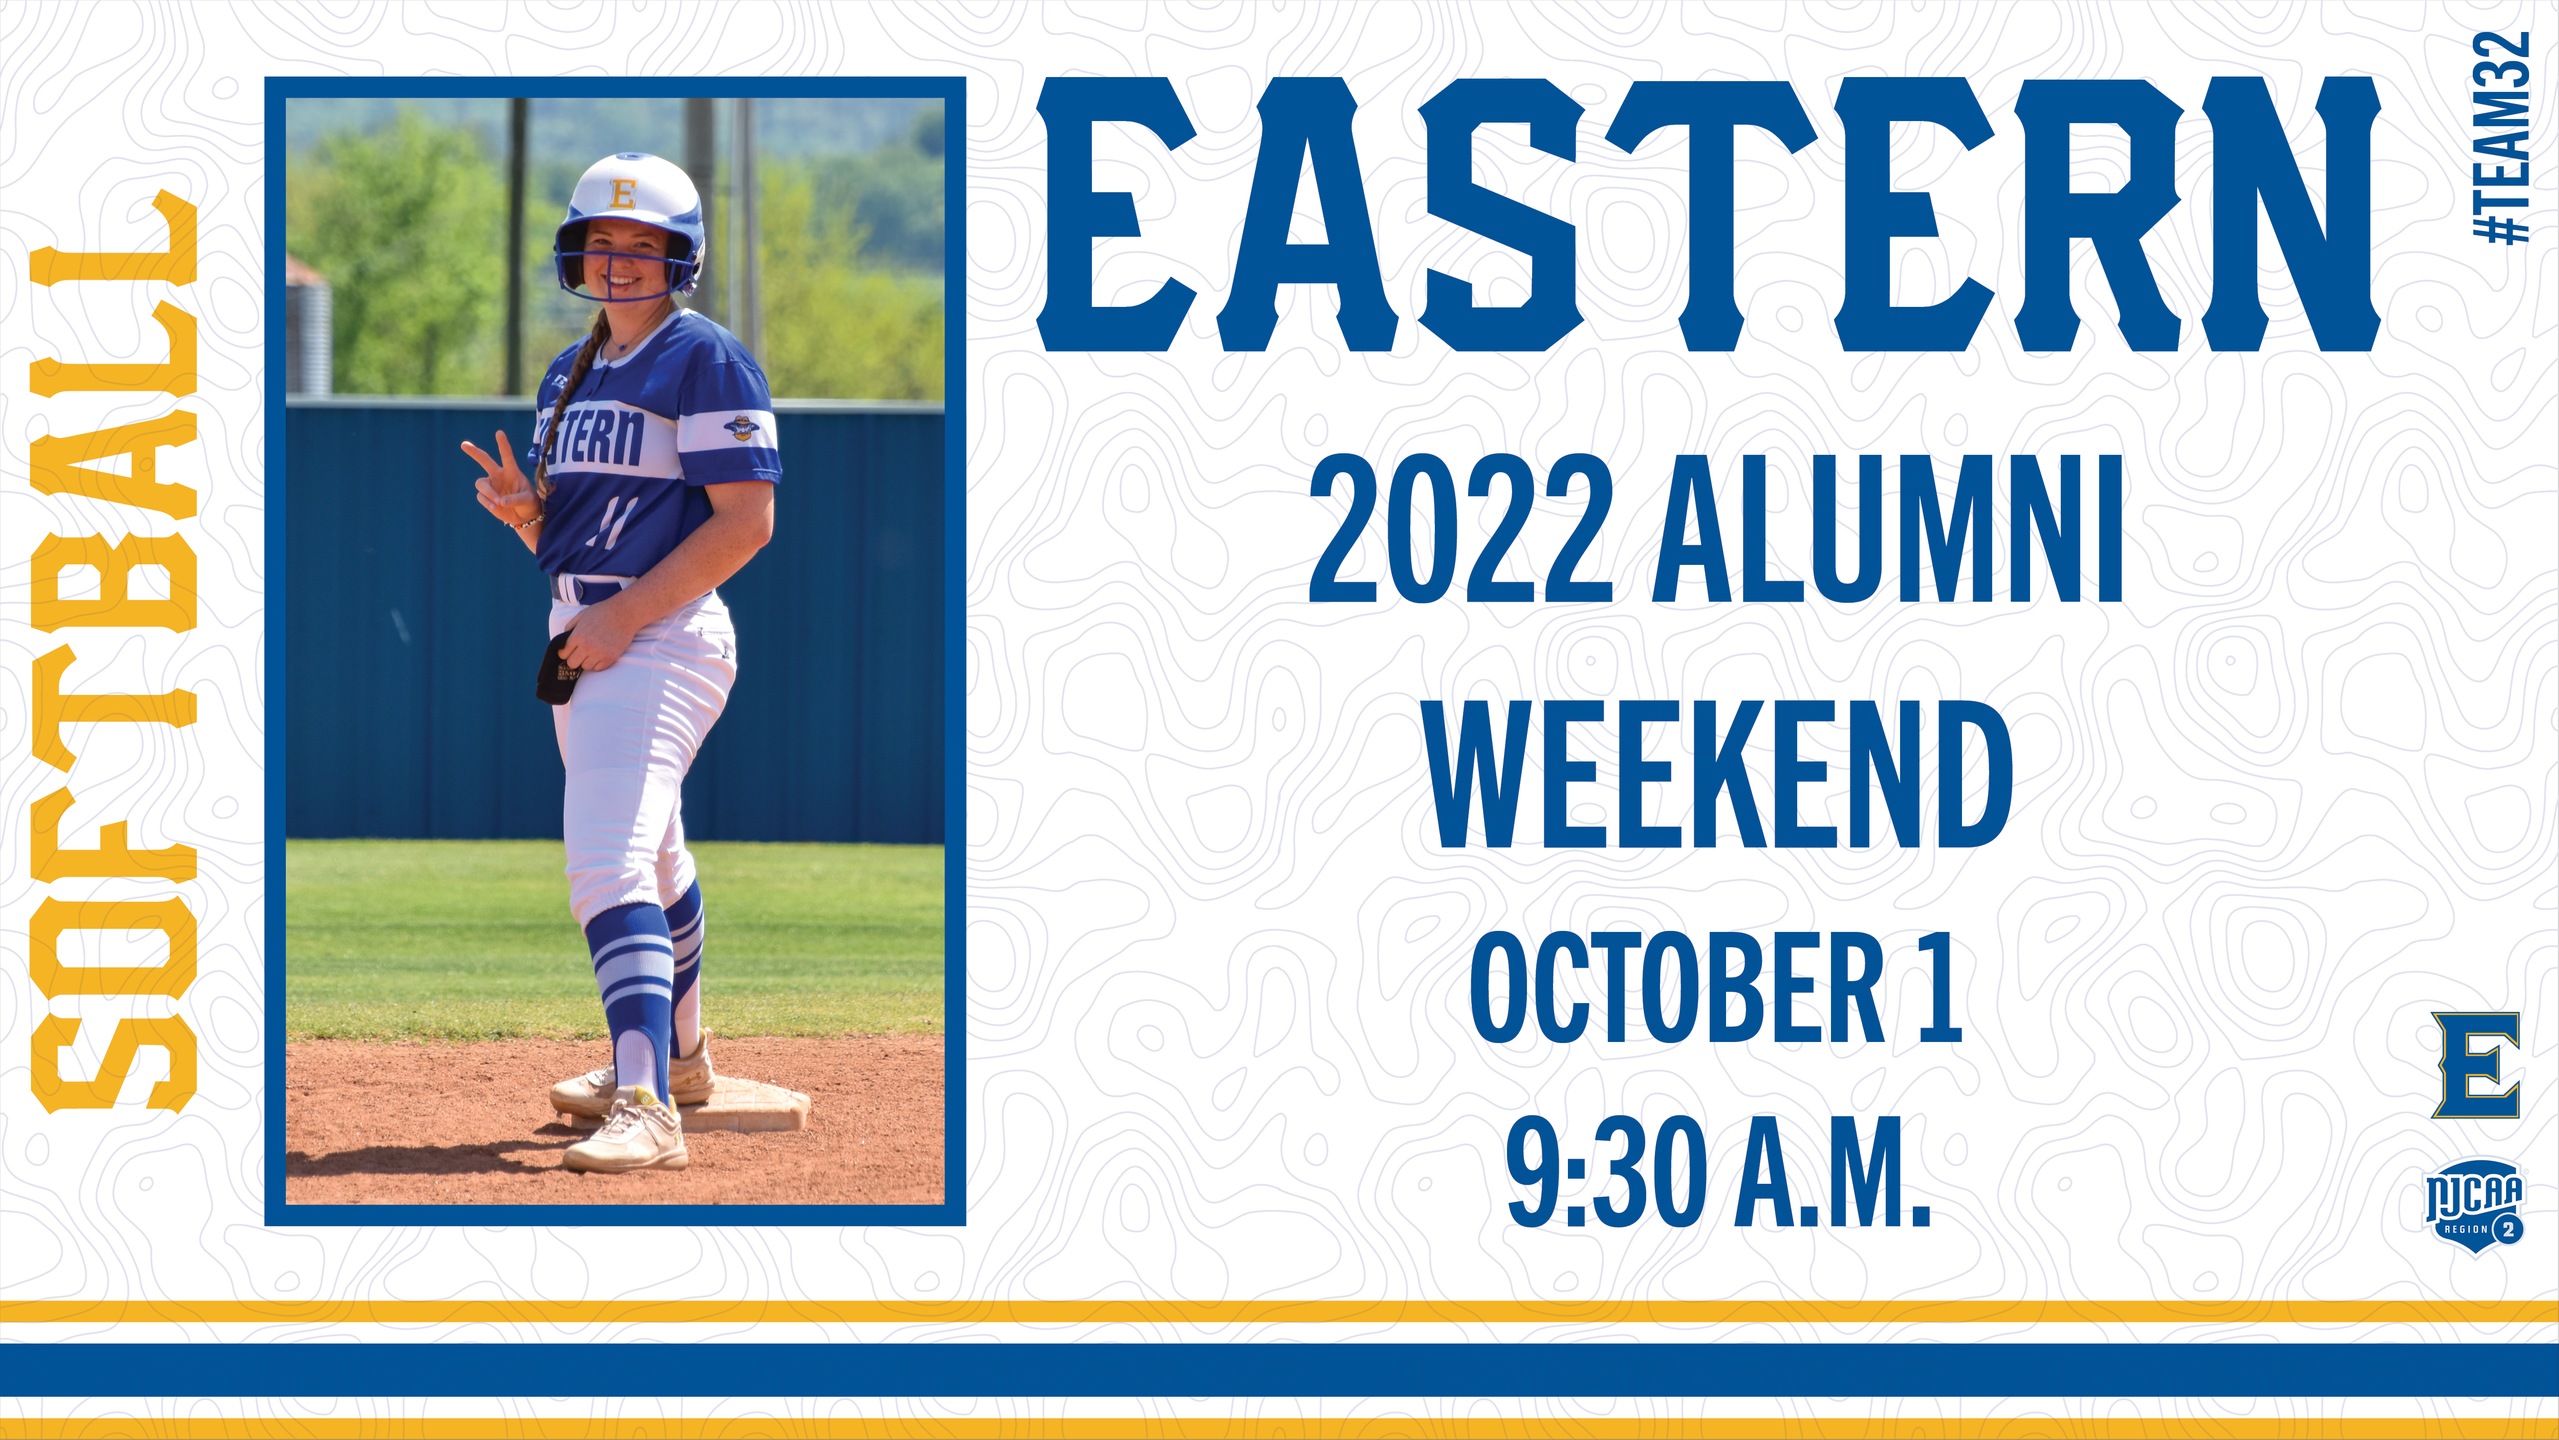 Eastern Softball to host Alumni Weekend